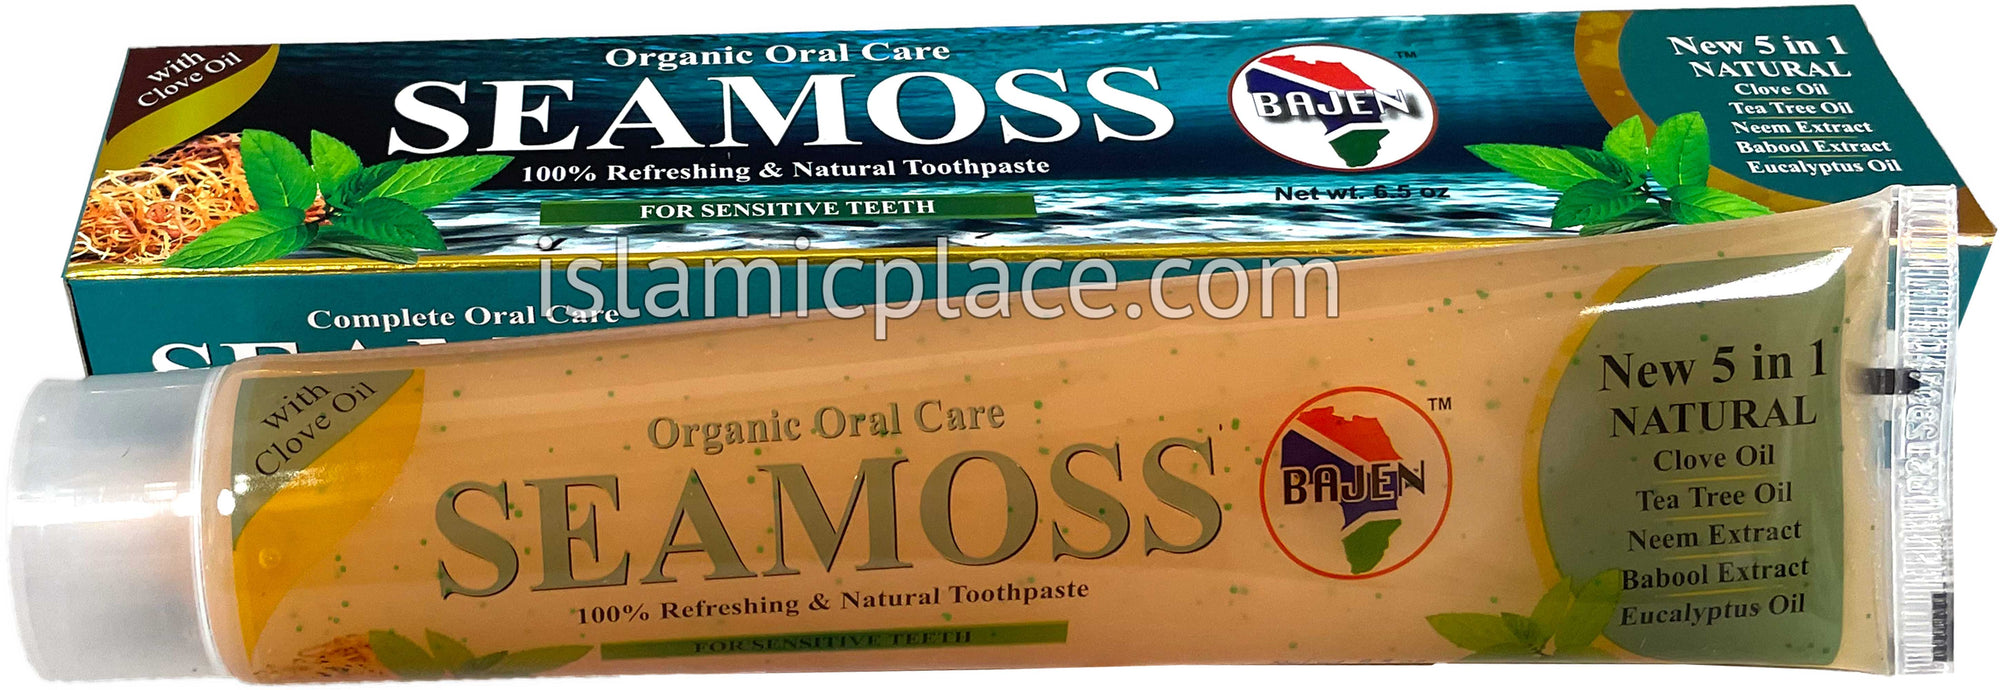 Sea moss Toothpaste - 5 in 1 (Clove Oil, Tea Tree Oil, Neem Extract, Babool Extract, Eucalyptus Oil) 6.5 oz - Halal & Organic